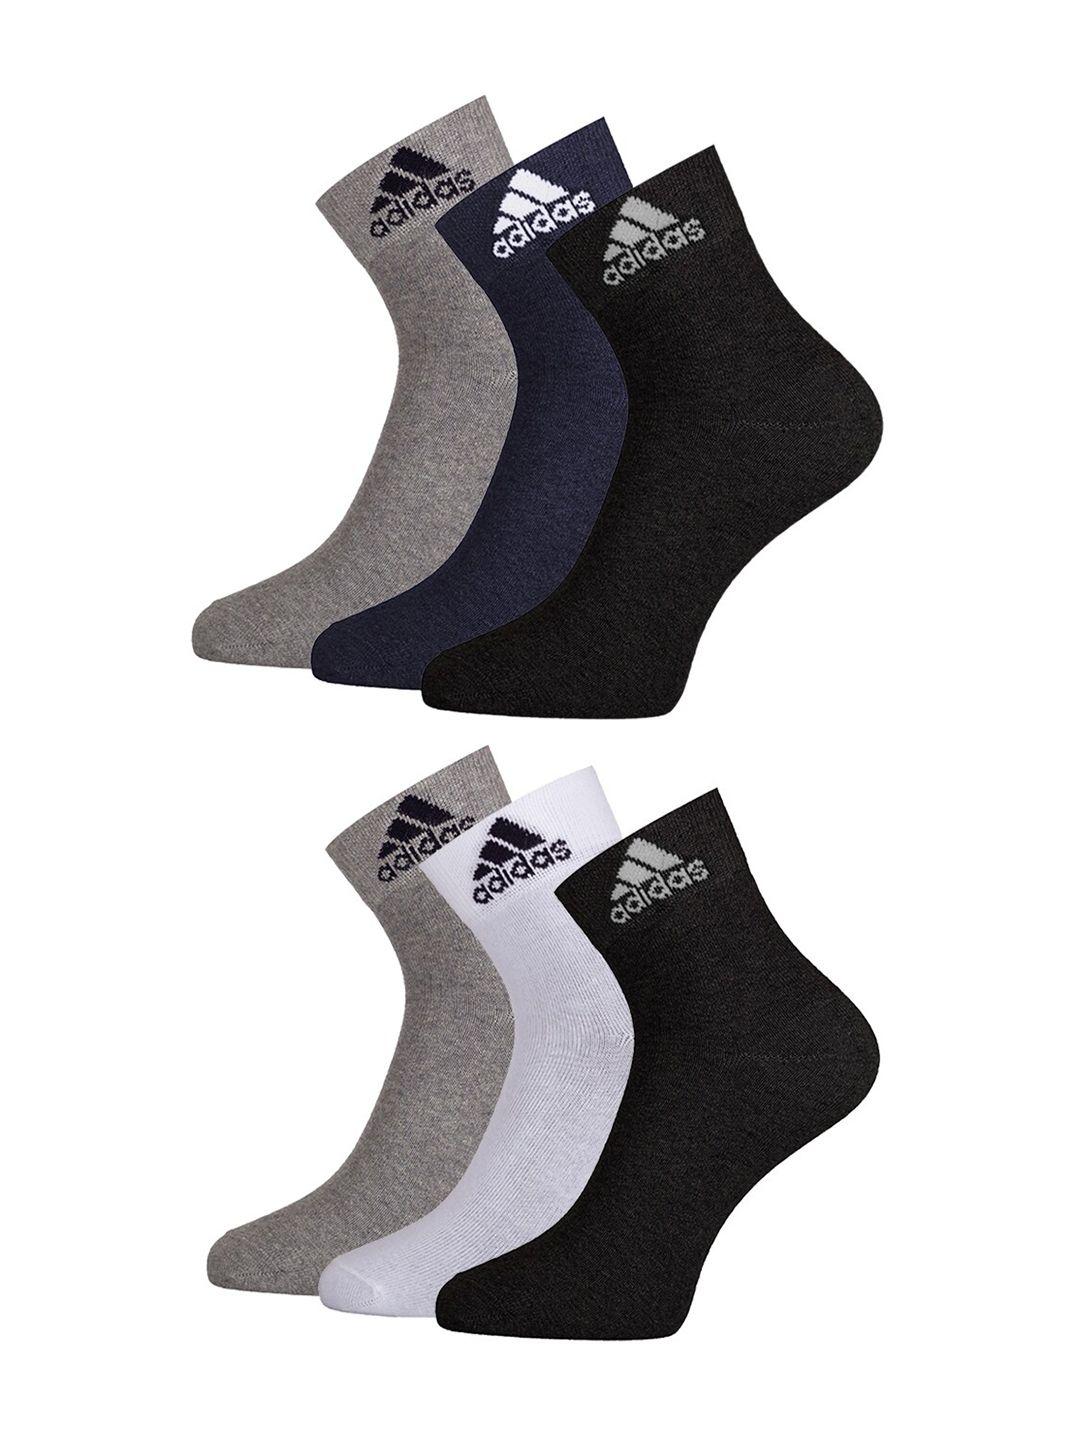 adidas pack of 6 ankle length socks